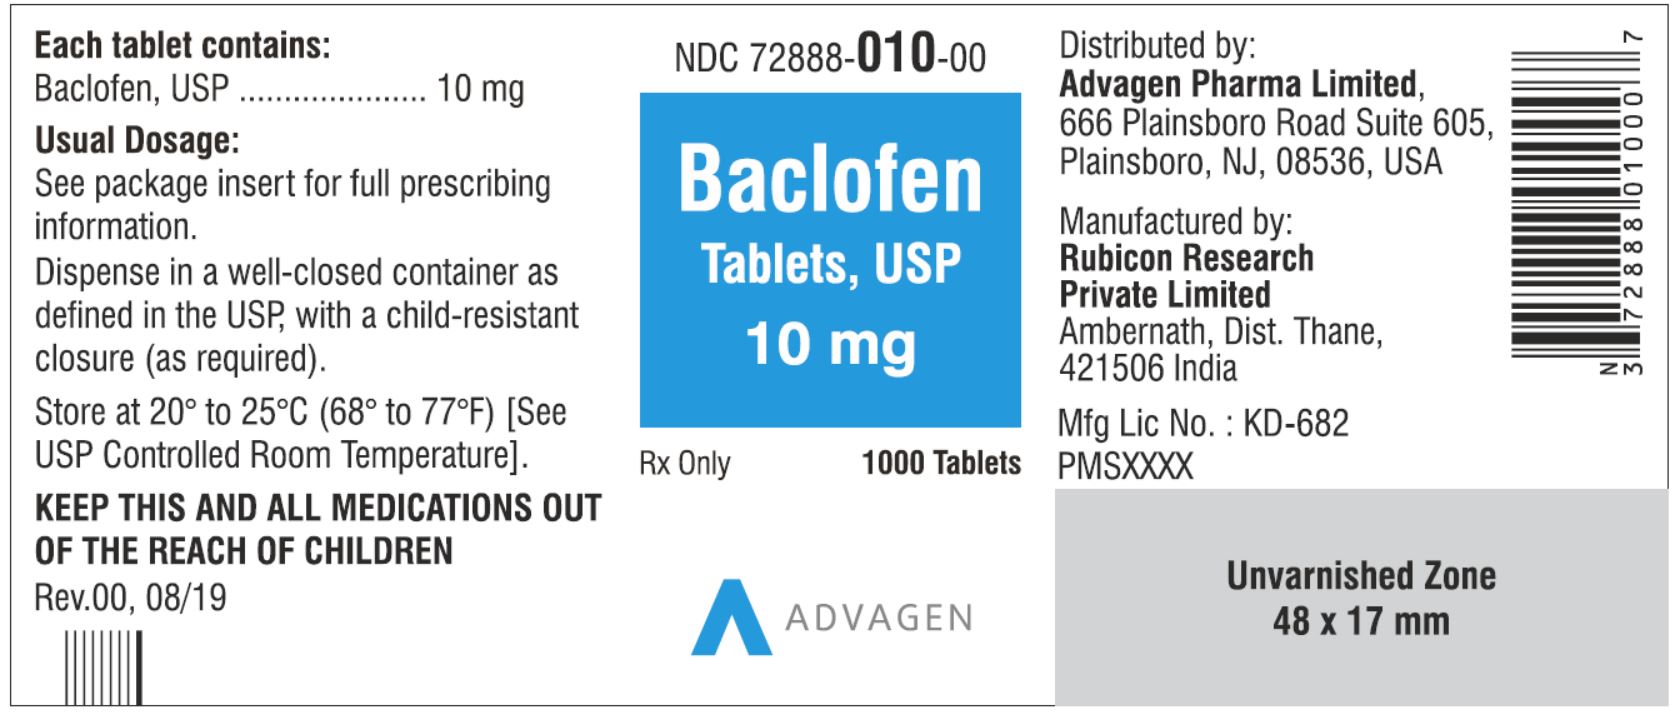 NDC: <a href=/NDC/72888-010-00>72888-010-00</a> - Baclofen Tablets, USP 10 mg - 1000 Tablets